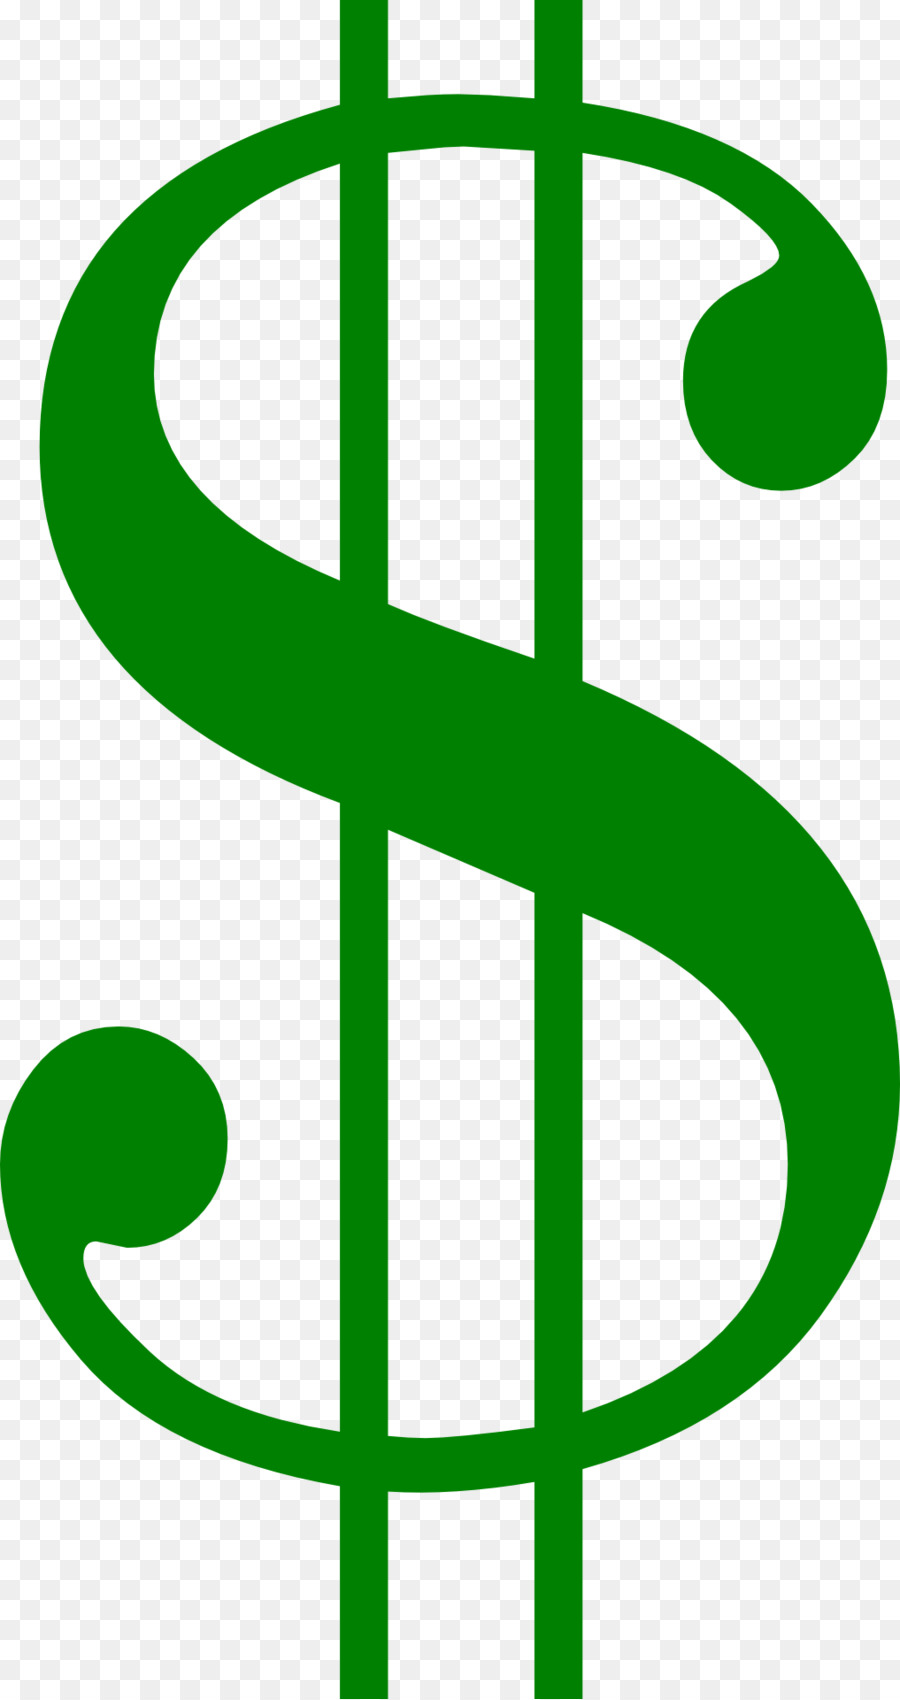 Dollar sign United States Dollar Currency symbol Clip art - dollar png download - 1017*1920 - Free Transparent Dollar Sign png Download.